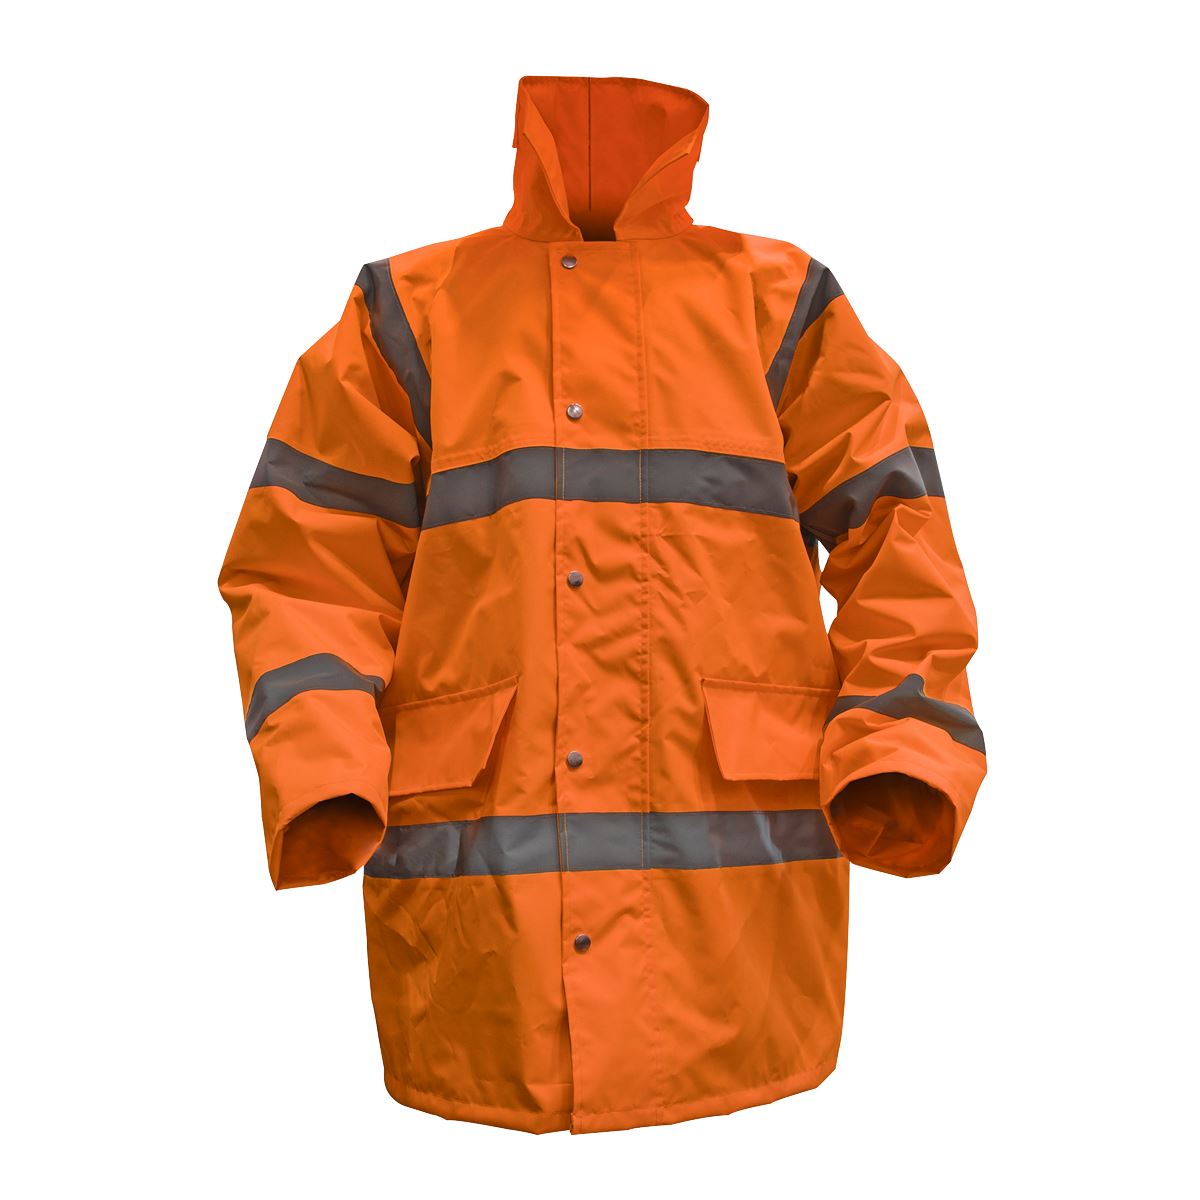 Worksafe by Sealey Hi-Vis Orange Motorway Jacket with Quilted Lining - X-Large